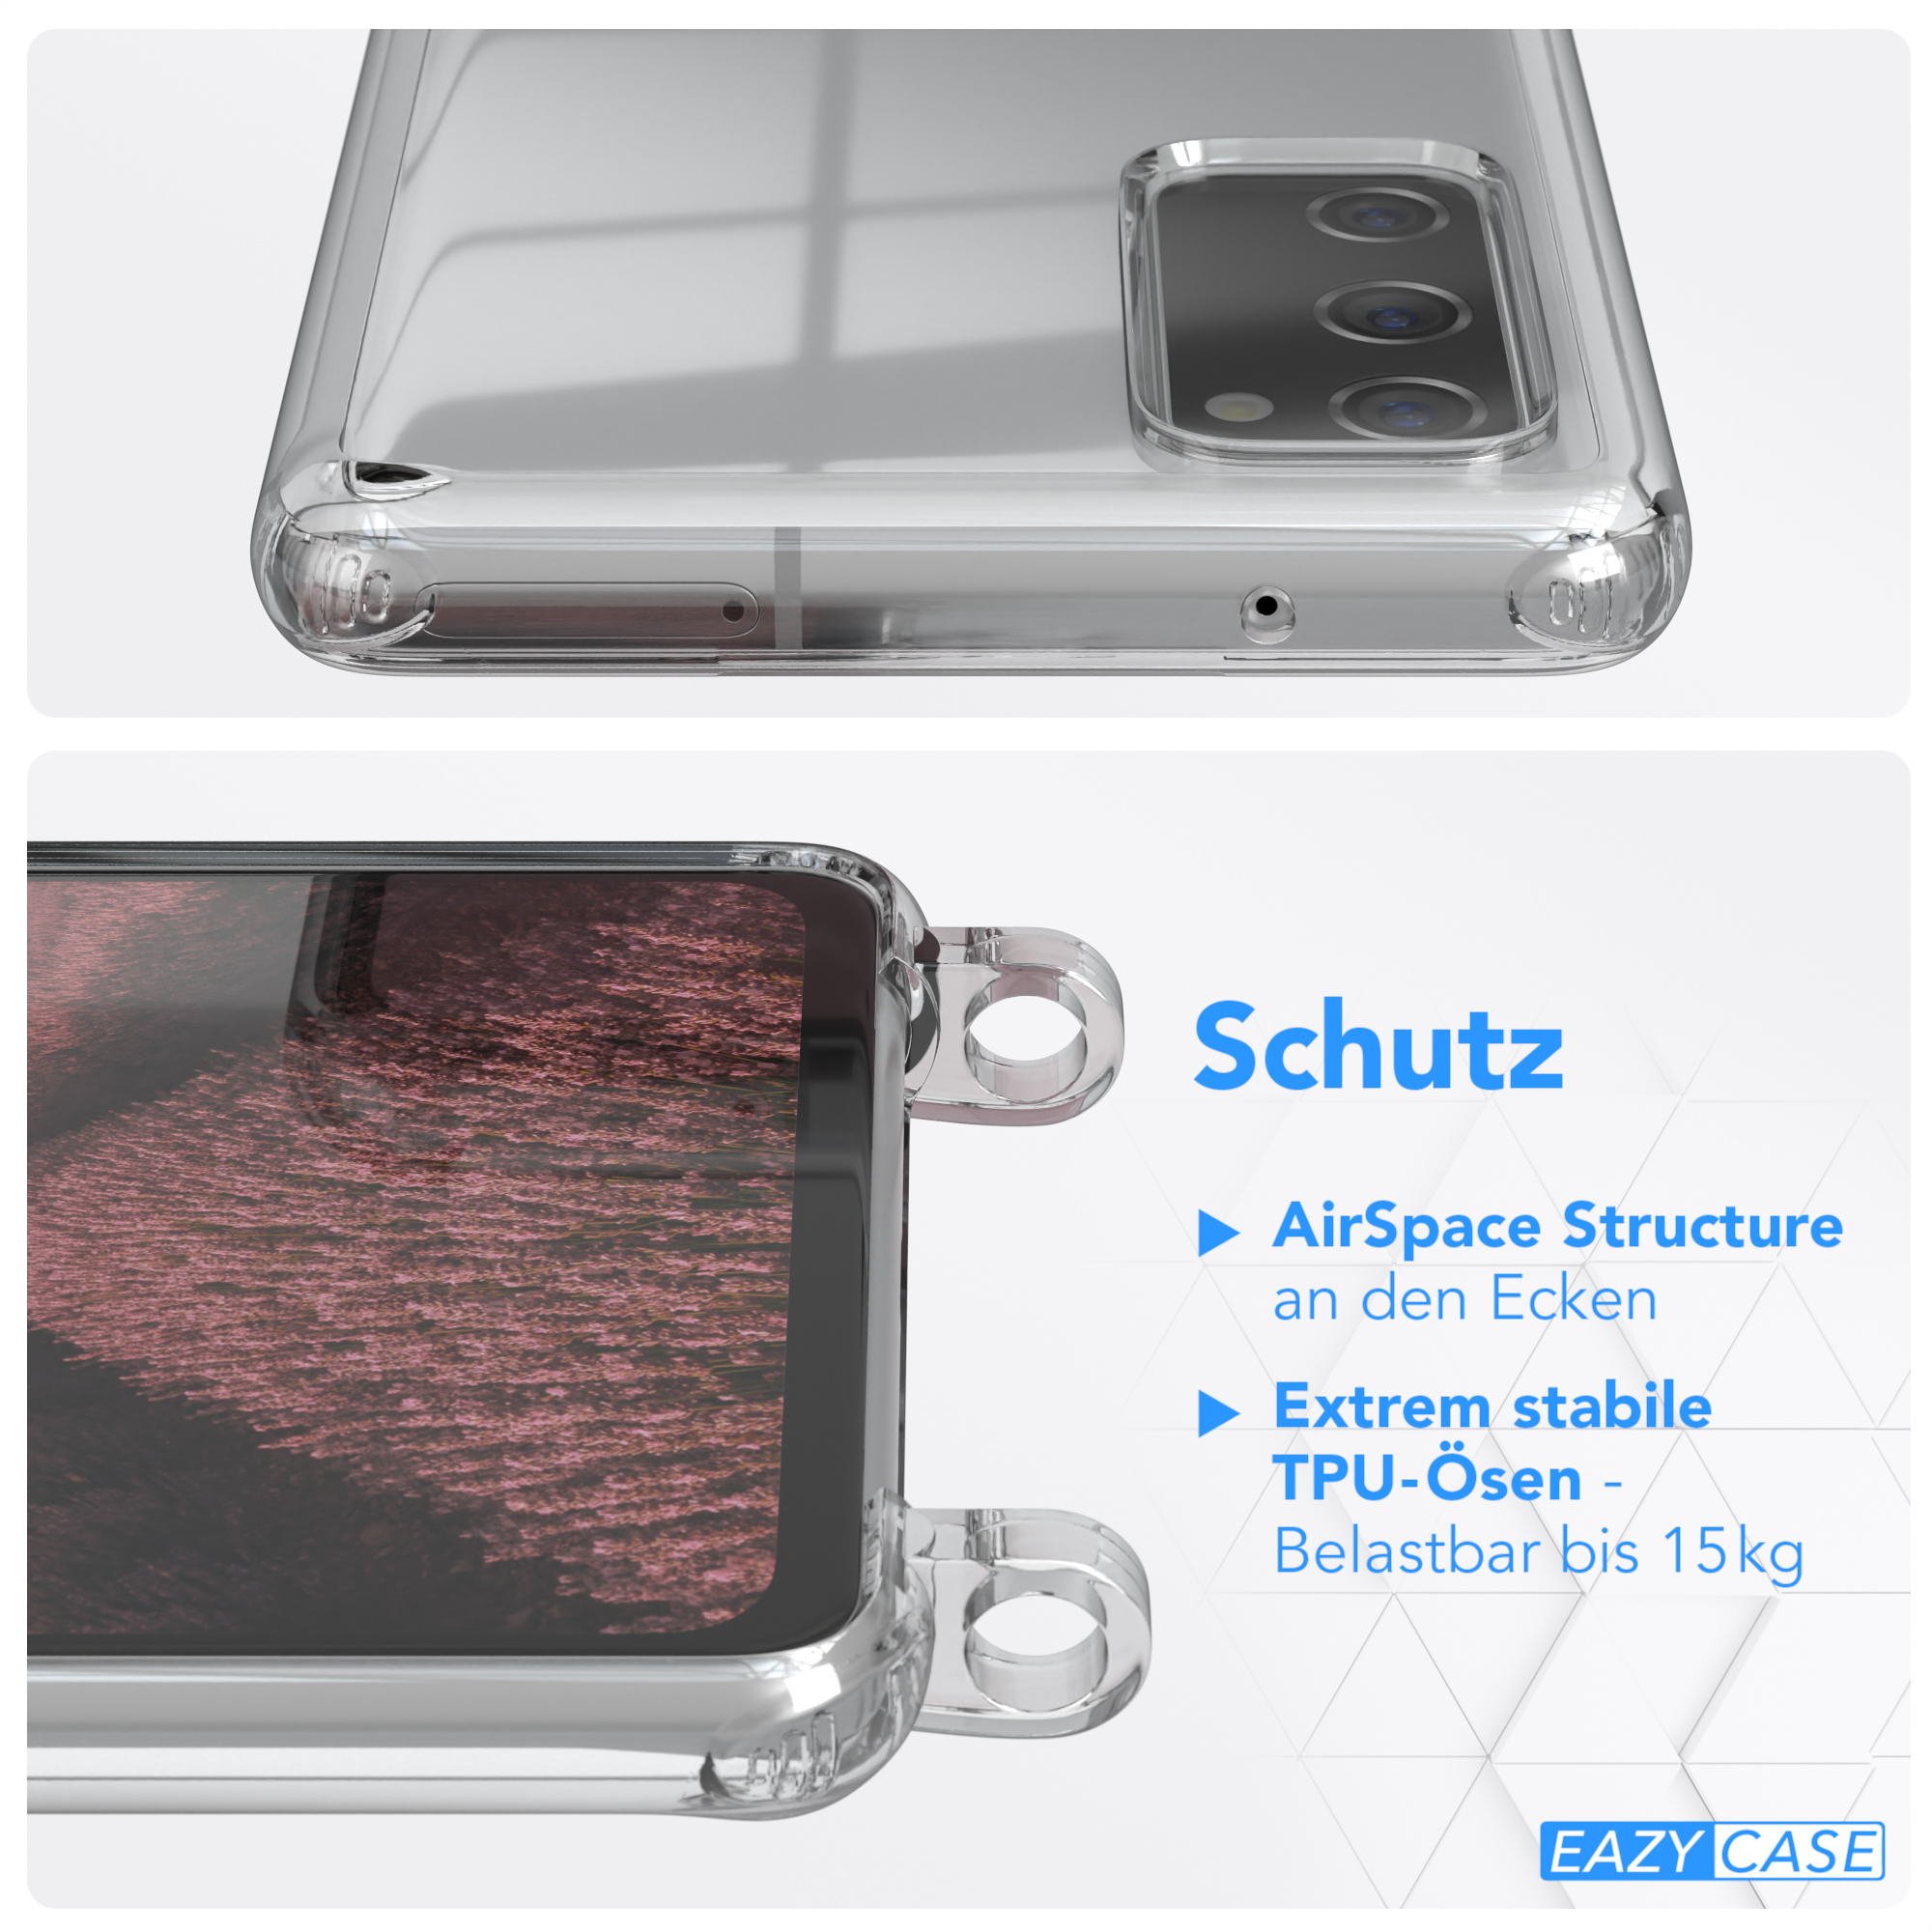 Samsung, / EAZY FE CASE Cover Clear 5G, FE Umhängeband, S20 mit Altrosa Uni Umhängetasche, Galaxy S20